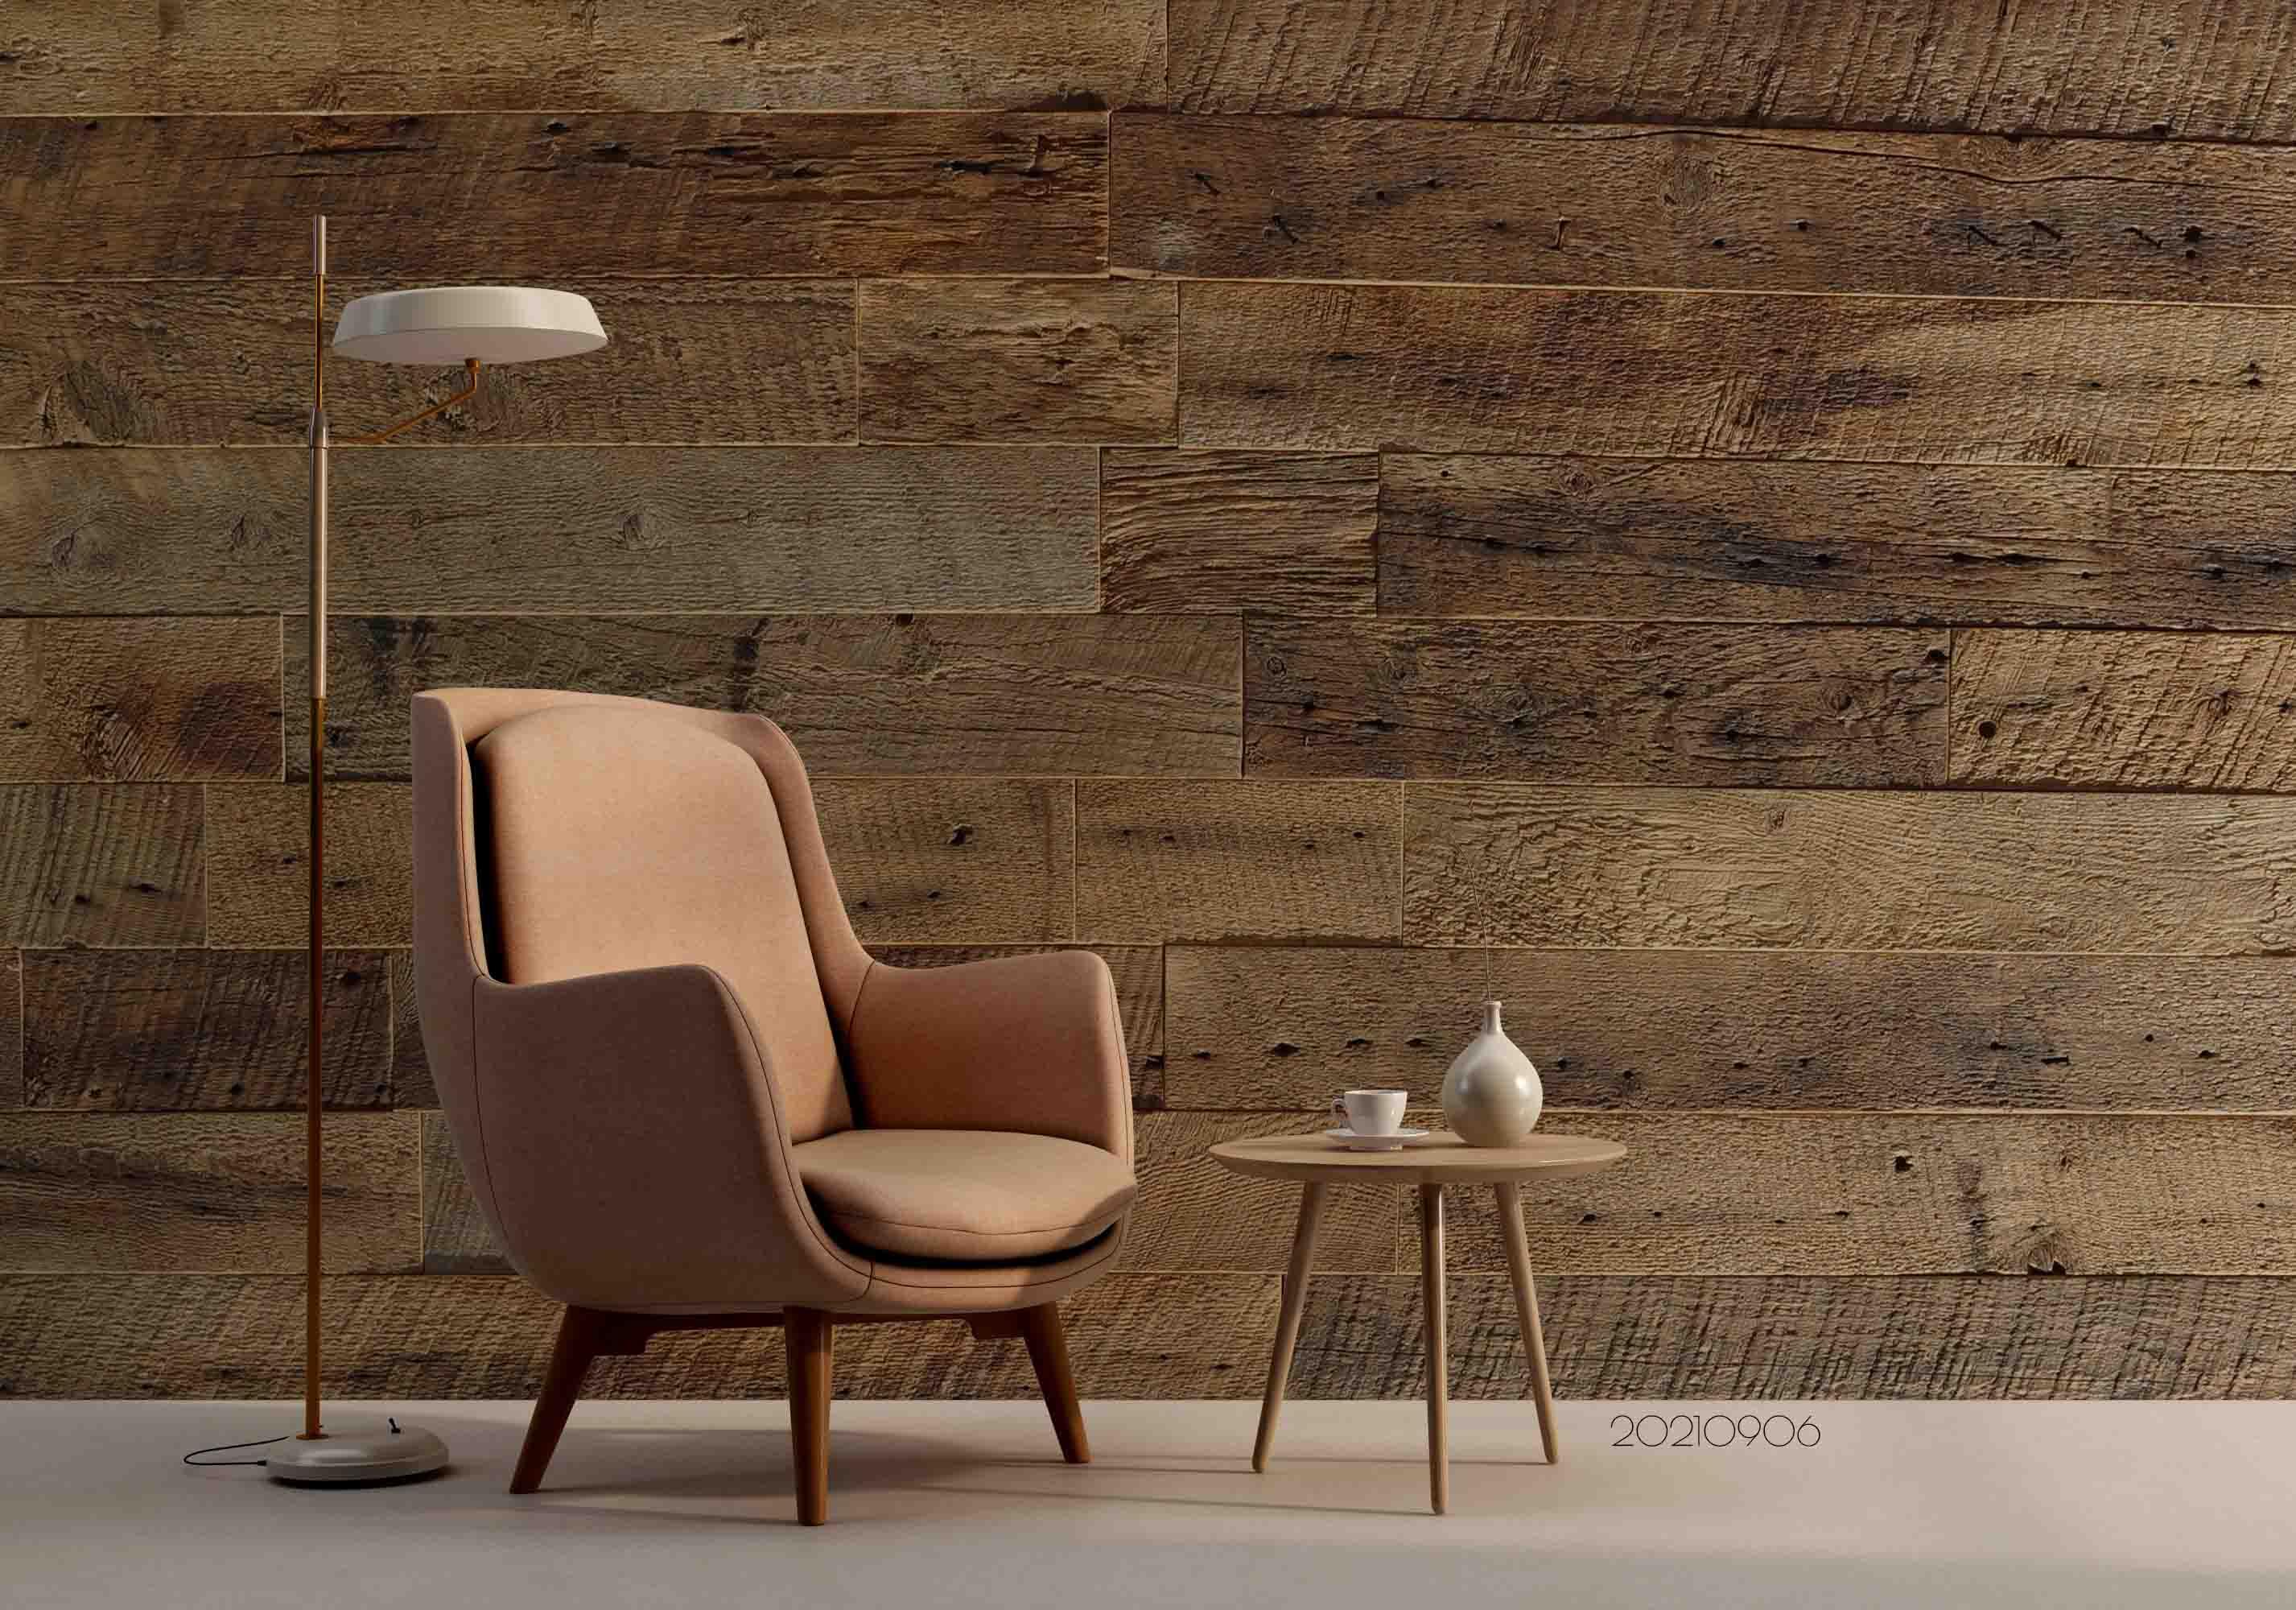 3D Brown Wood Board Texture Wall Mural Wallpaper LQH 599- Jess Art Decoration